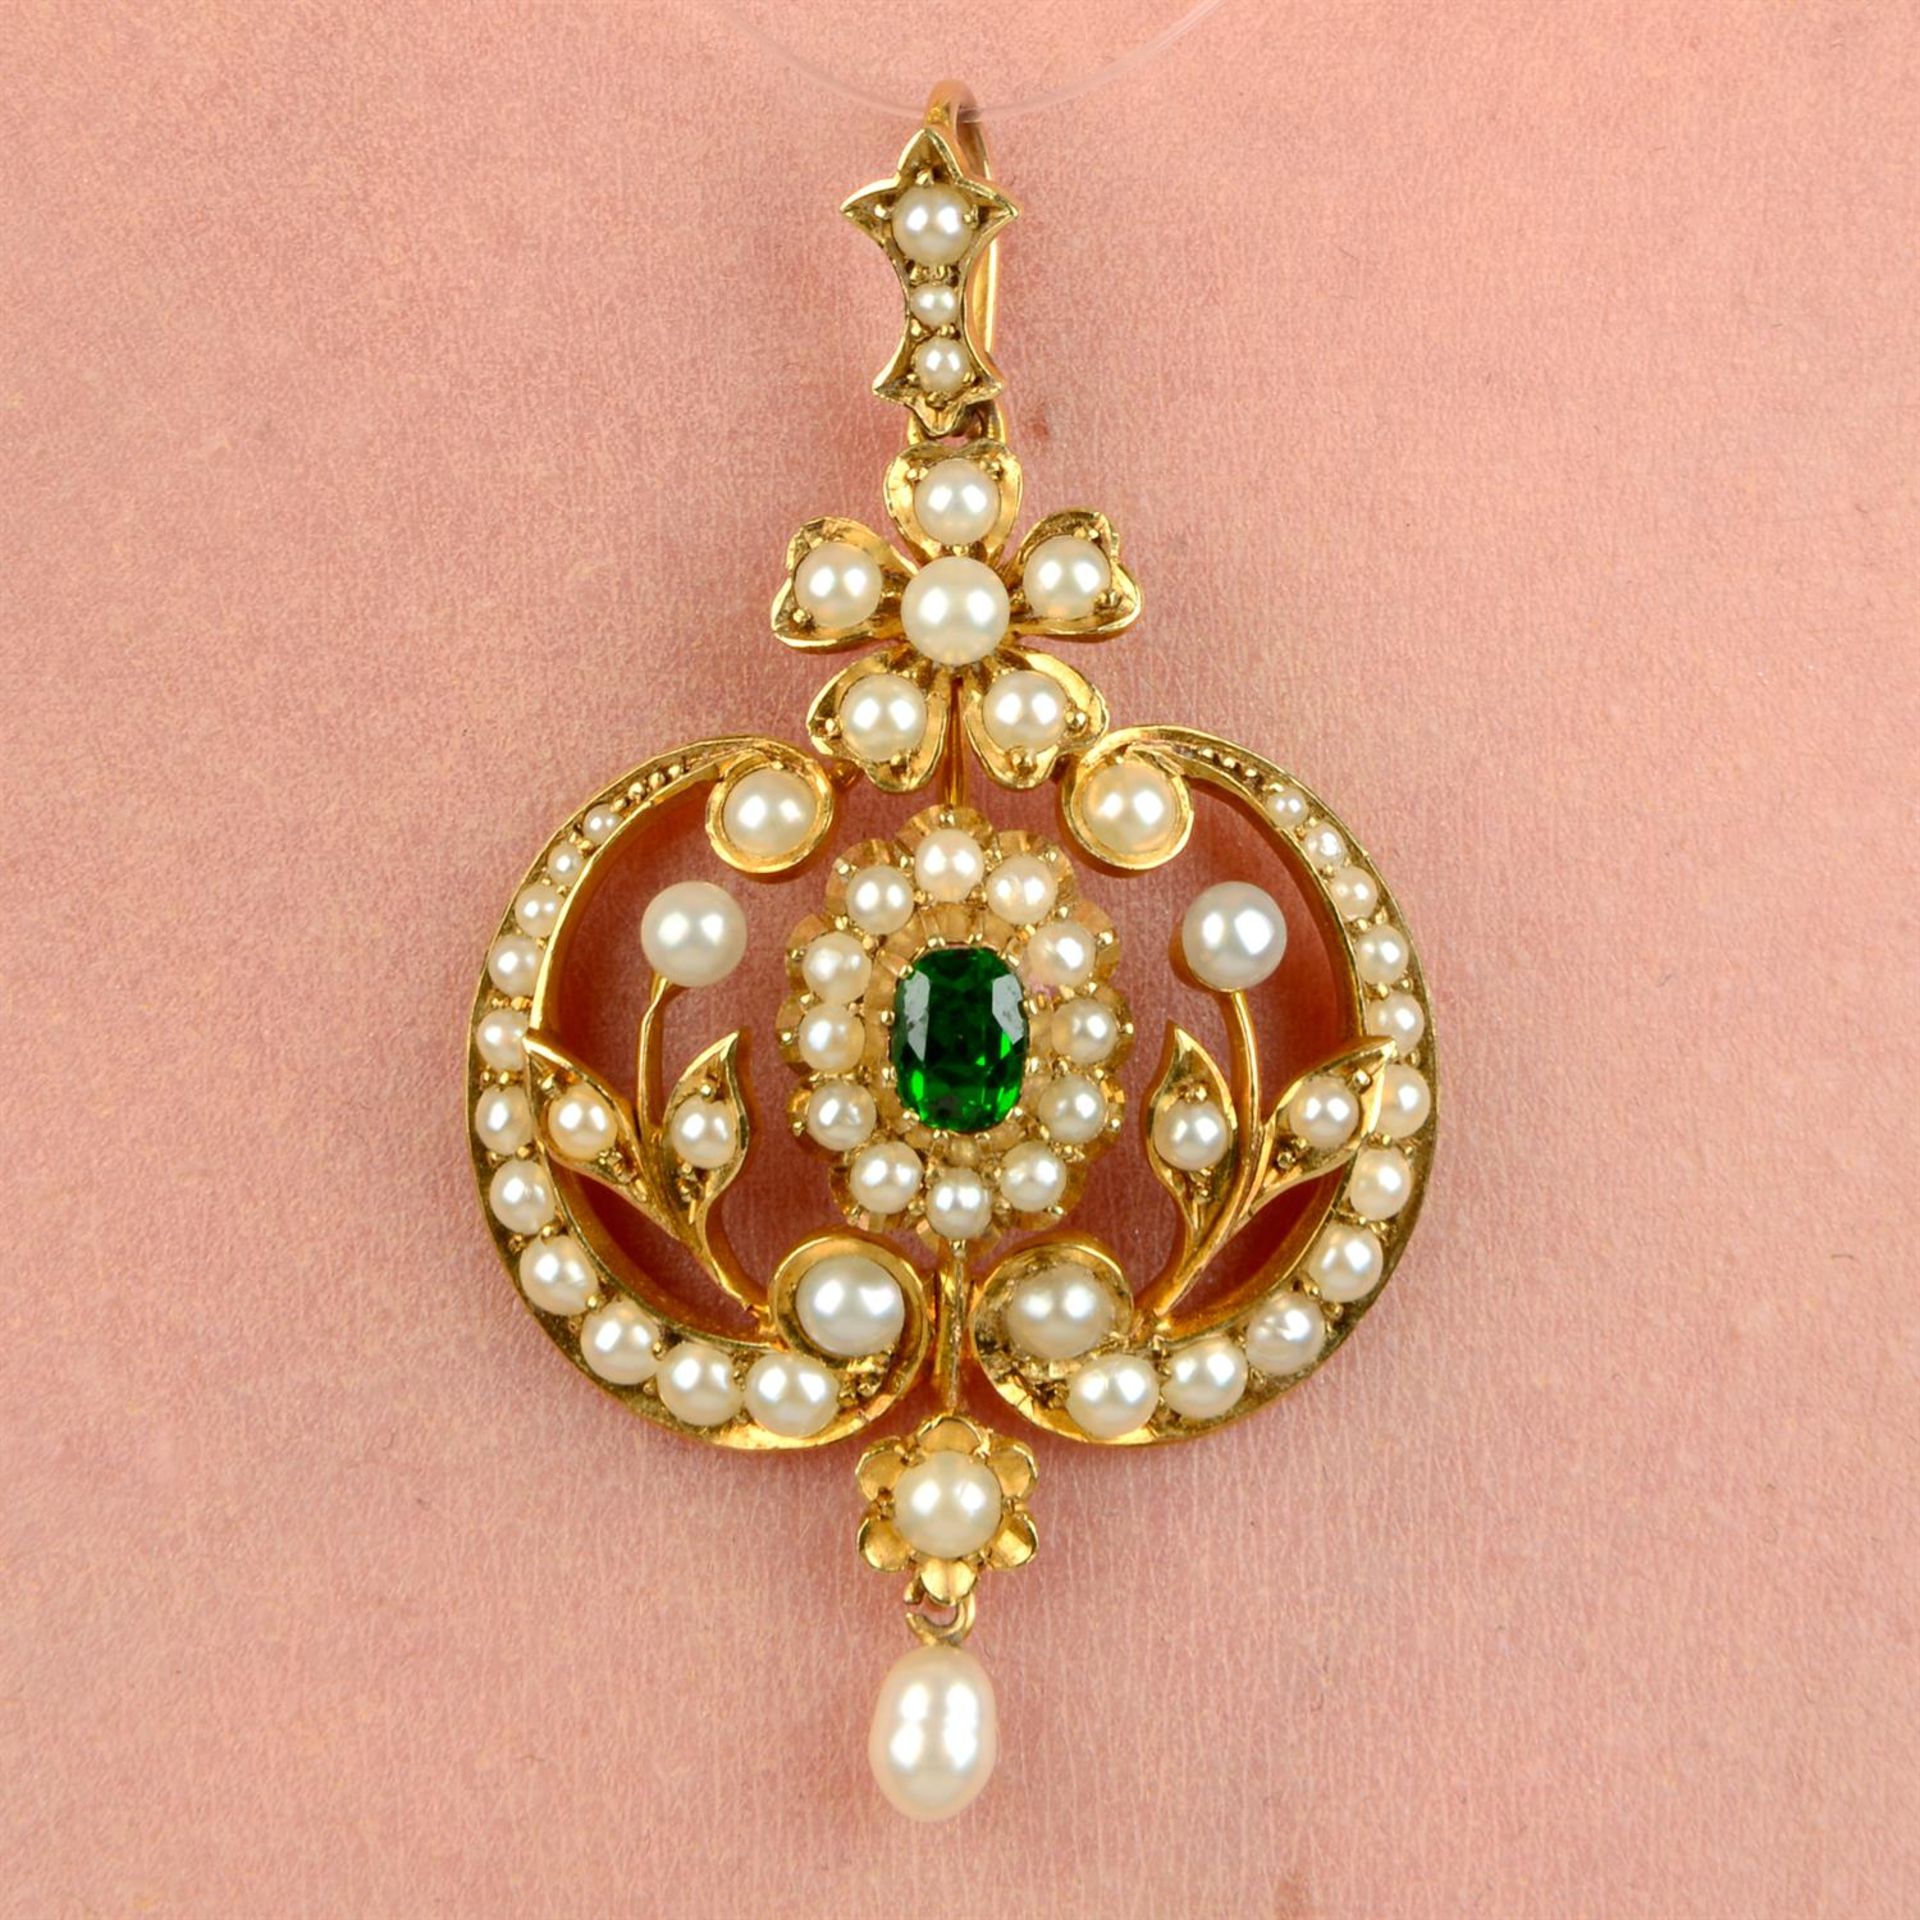 An early 20th century gold tsavorite garnet, seed and split pearl pendant.